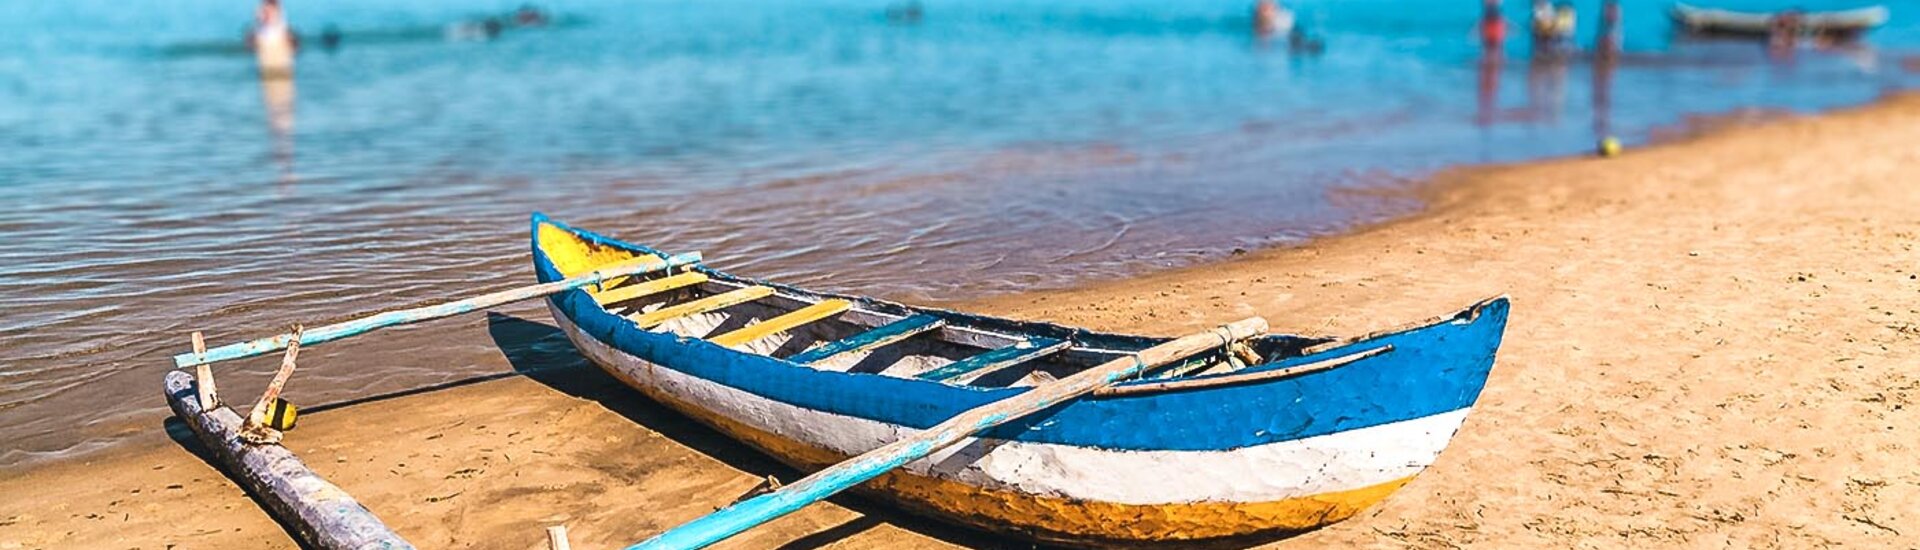 Boot am Strand von Mahavelona in Madagaskar